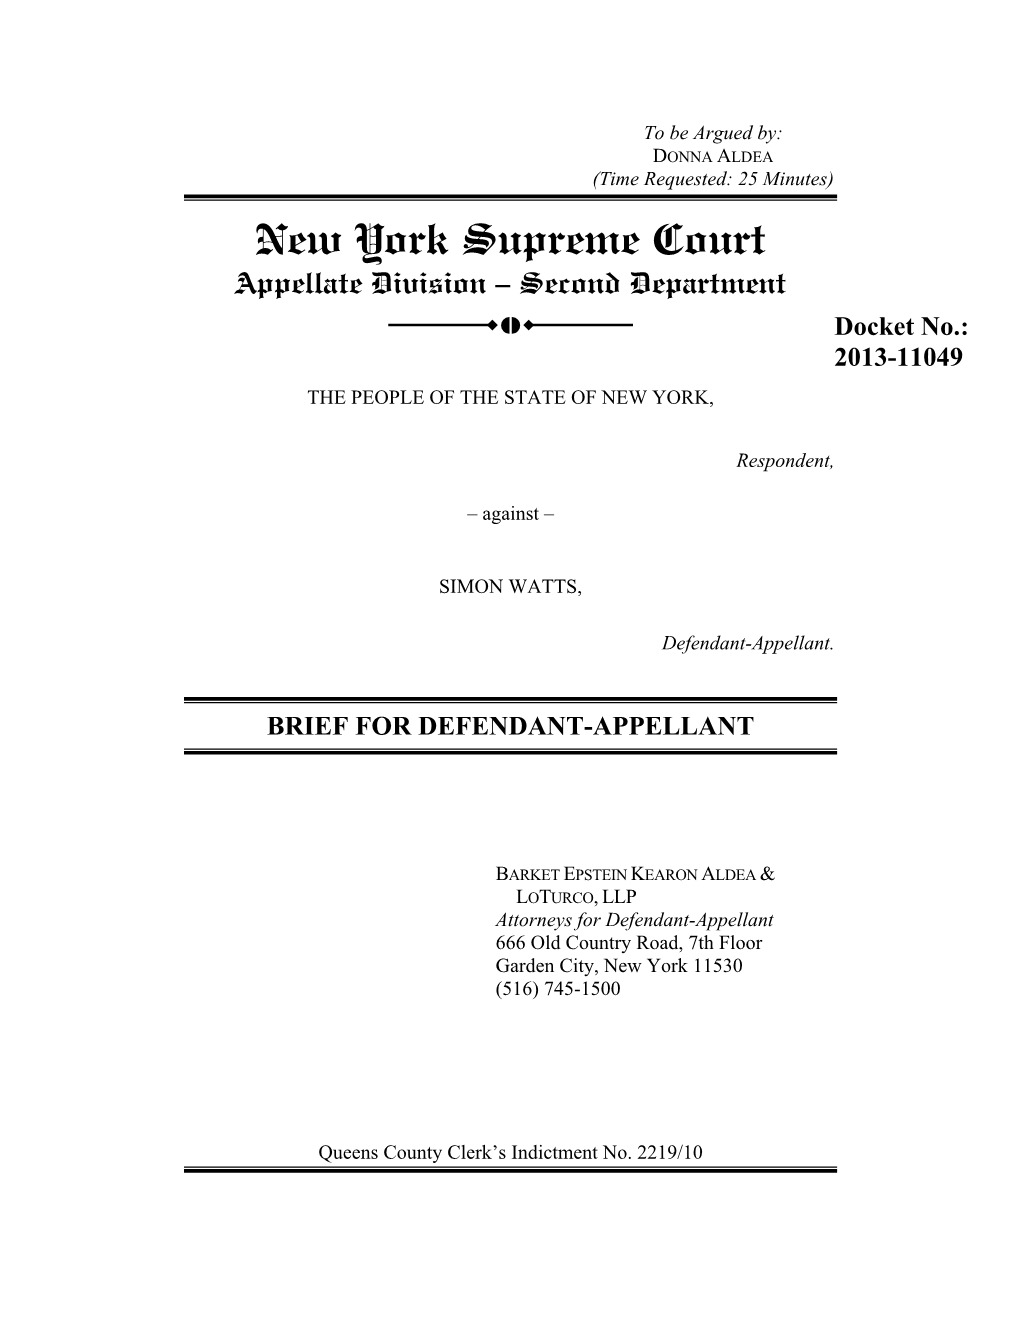 Watts-Defendant-Appellant's Brief